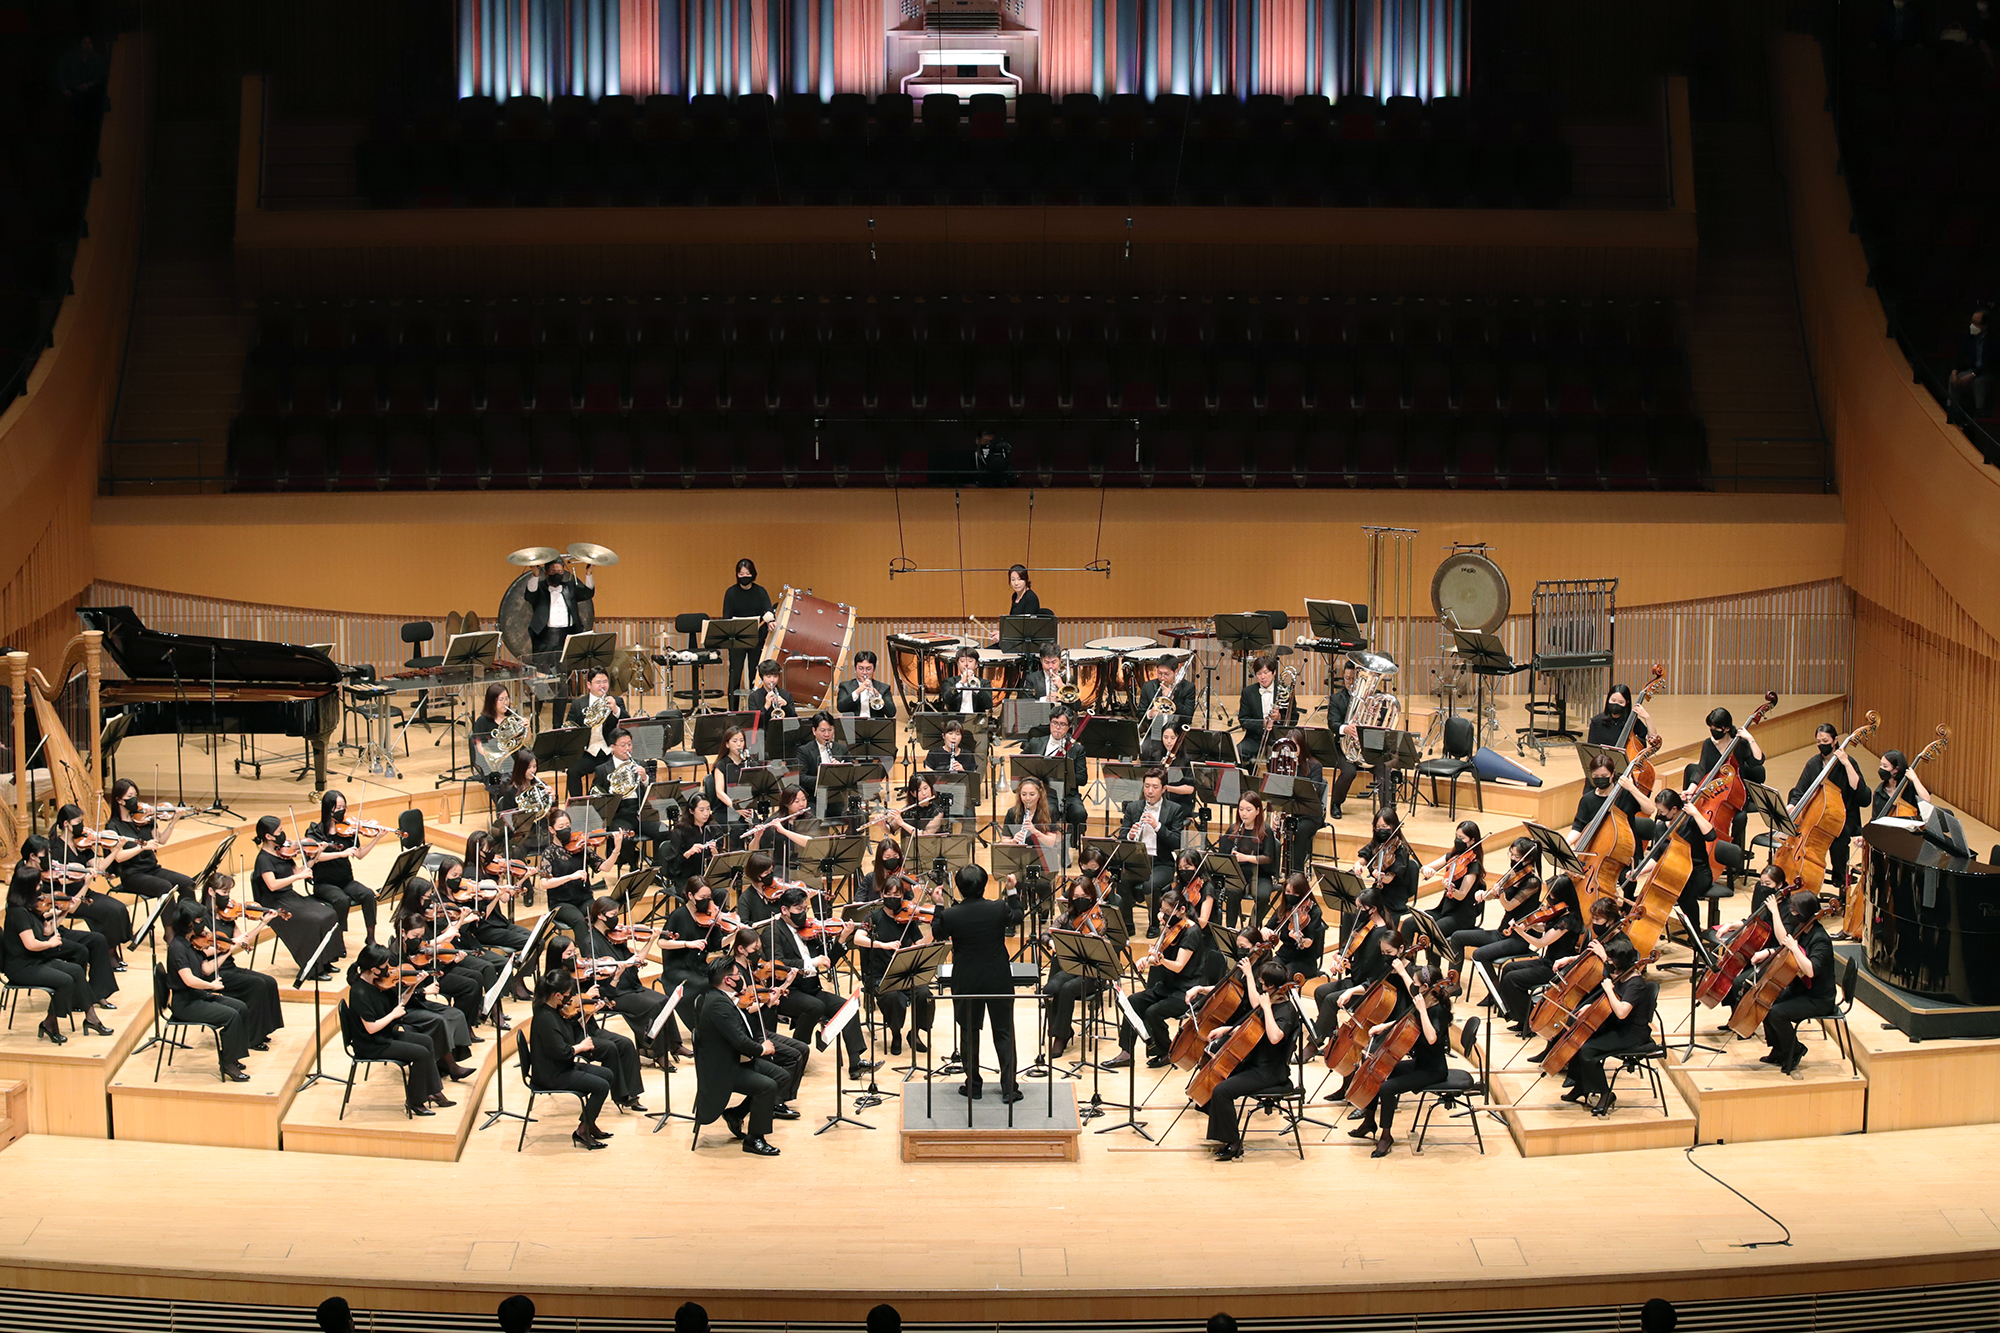 [6.30]Bucheon Philharmonic Orchestra 277th Subscription Concert